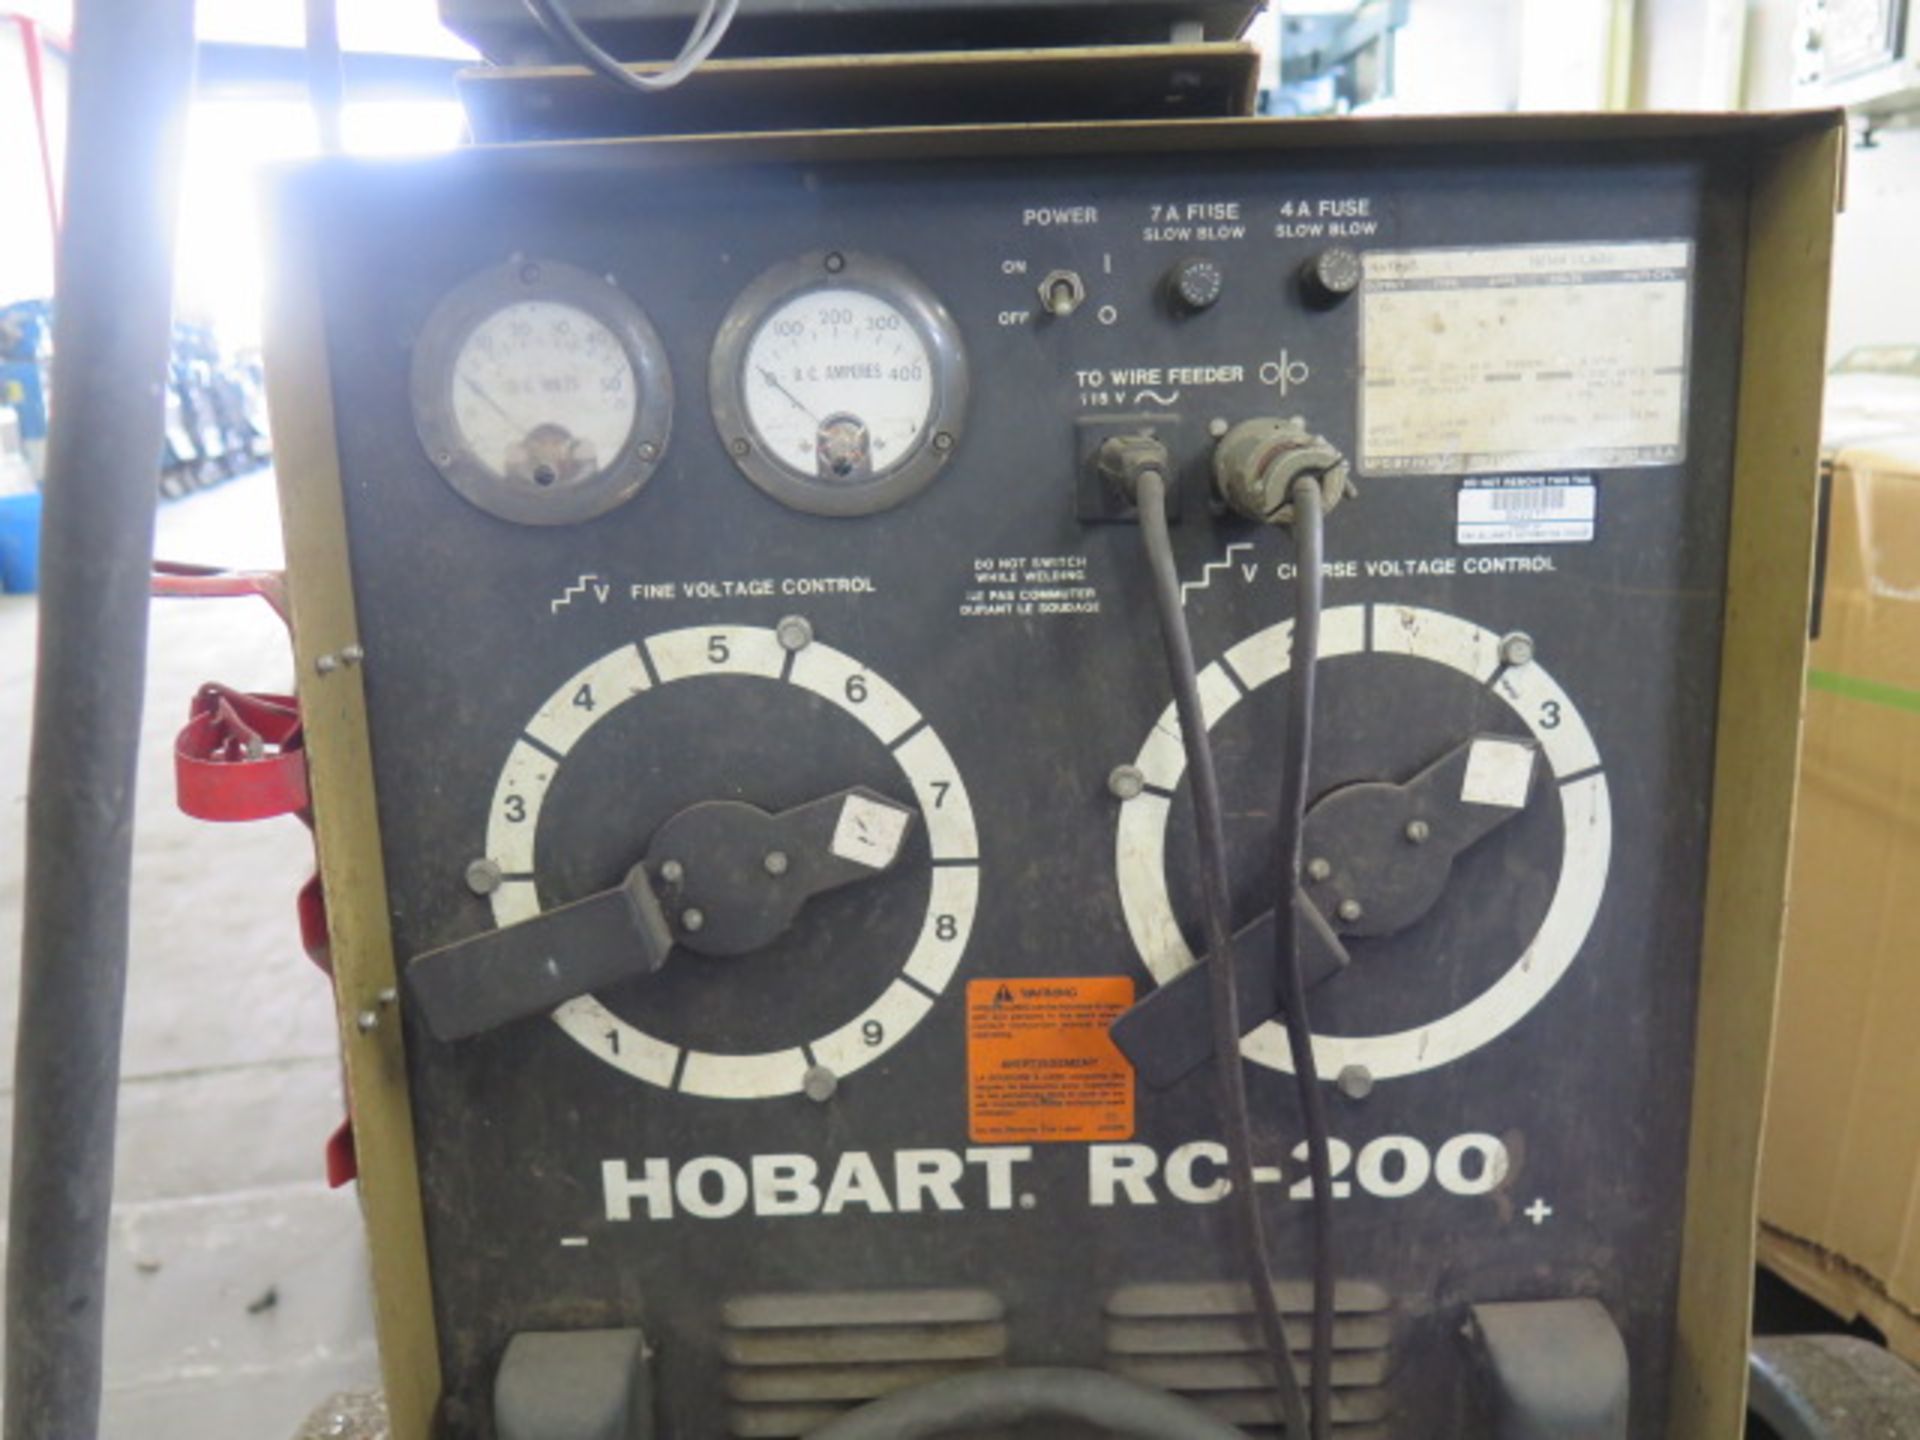 Hobart RC-200 Arc welding Power Source w/ Hobart-17 Wire Feeder - Image 5 of 10